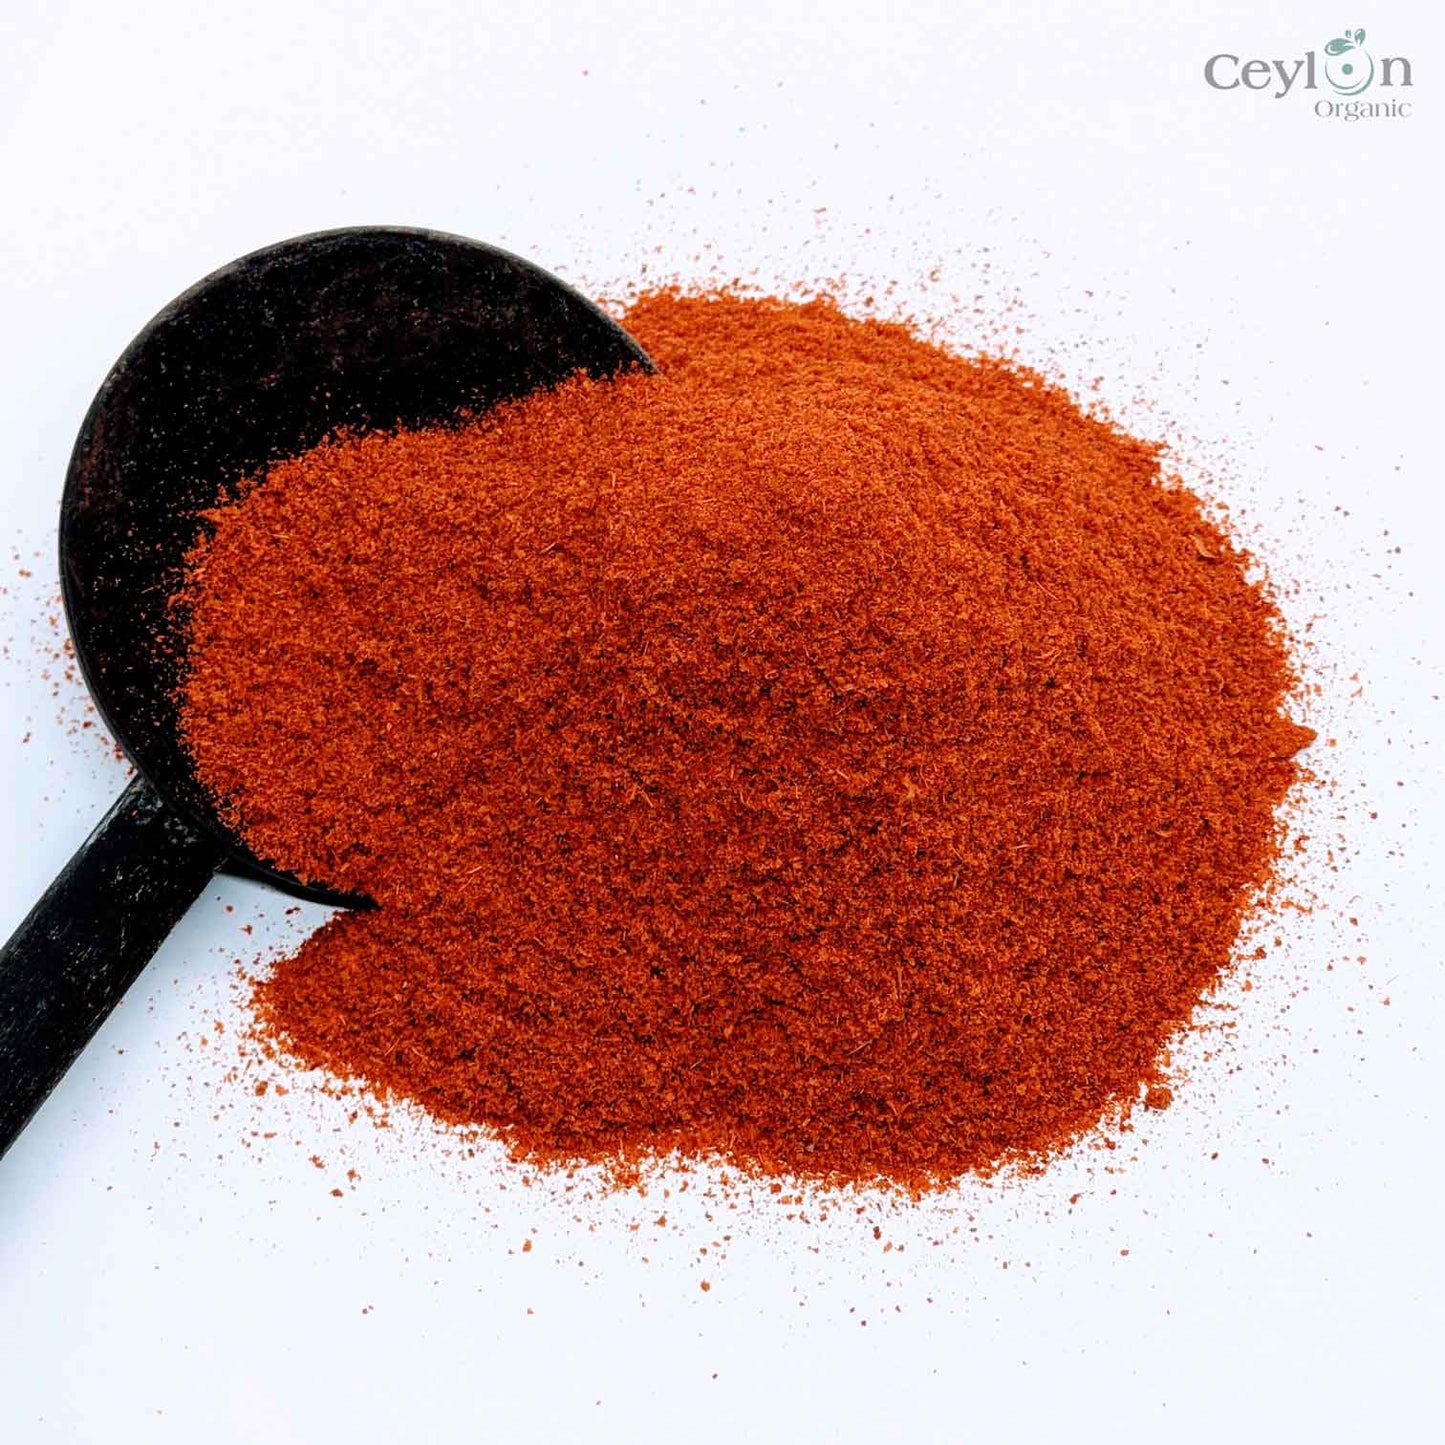 500g+ Ceylon Chilli Powder 100% Organic Natural Premium Sri Lankan Quality | Ceylon Organic-5